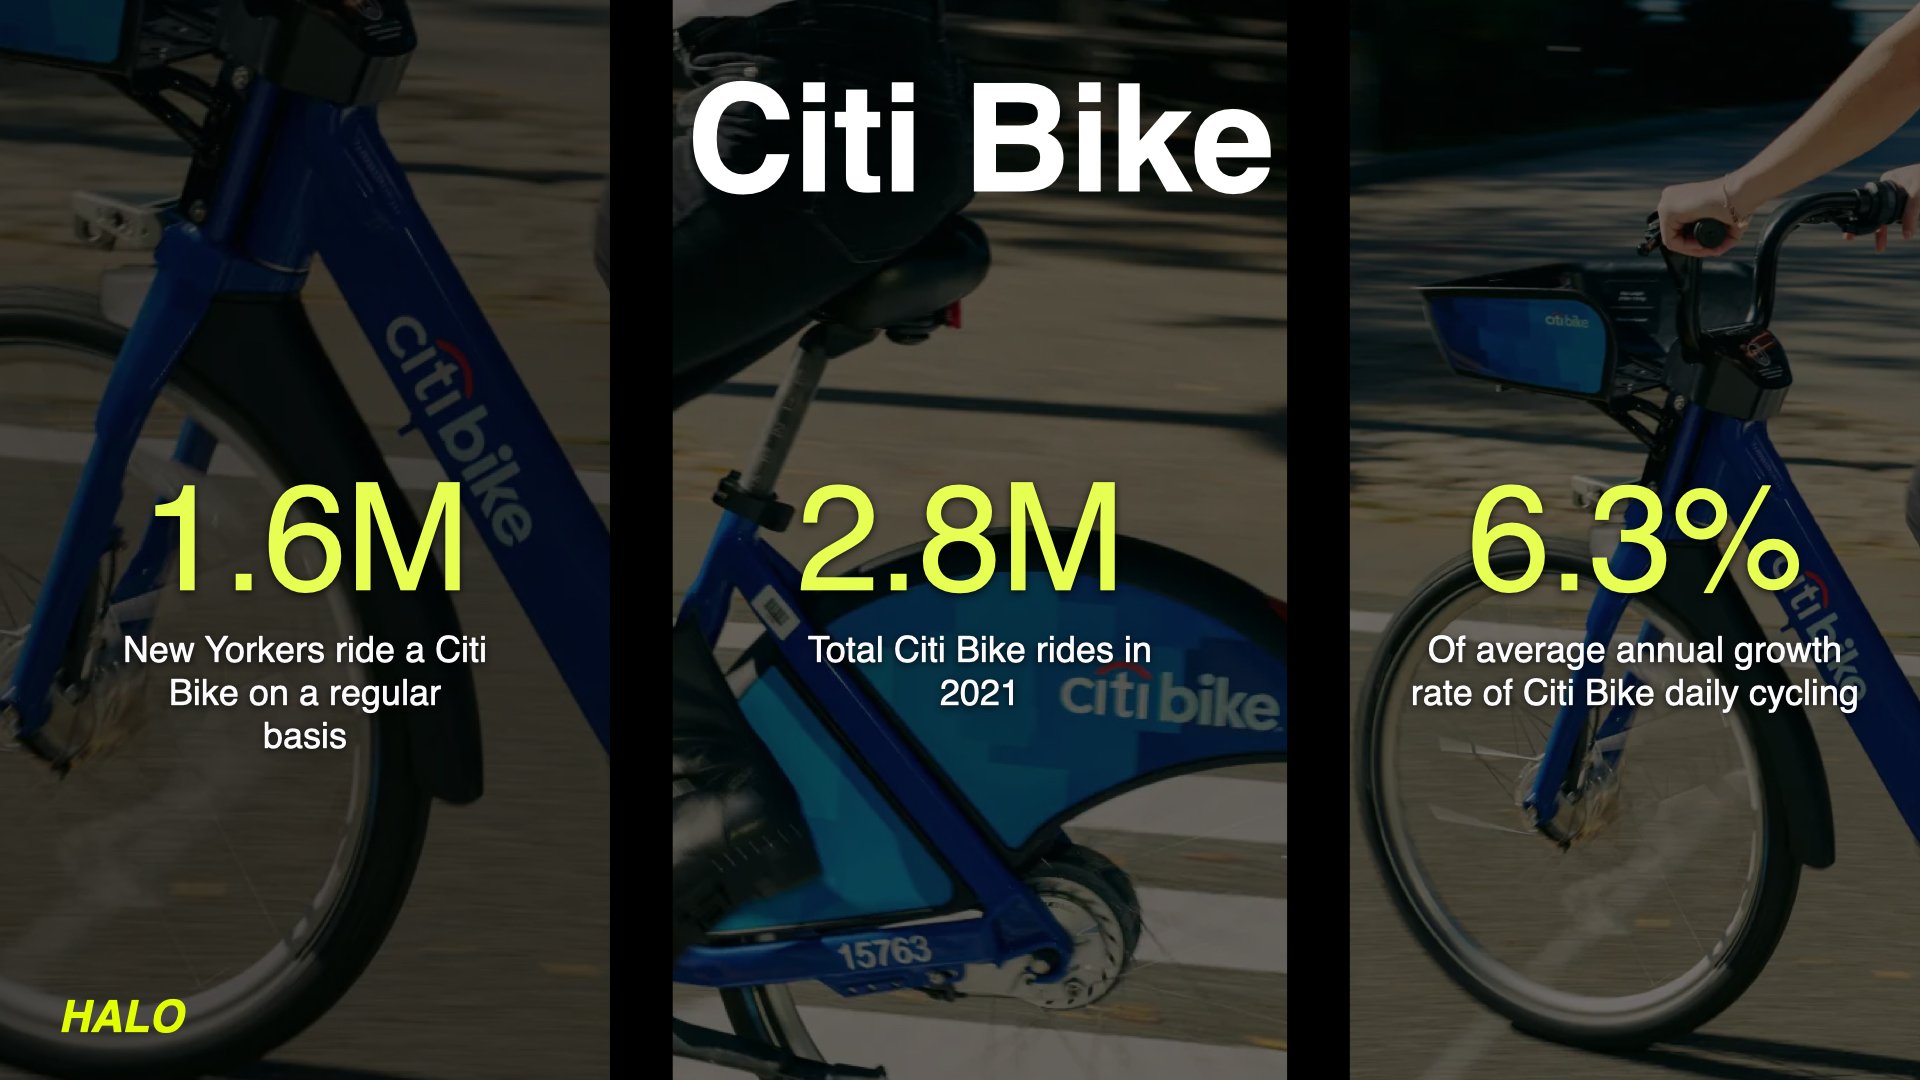  Citi Bike slide explaining statistics about users 